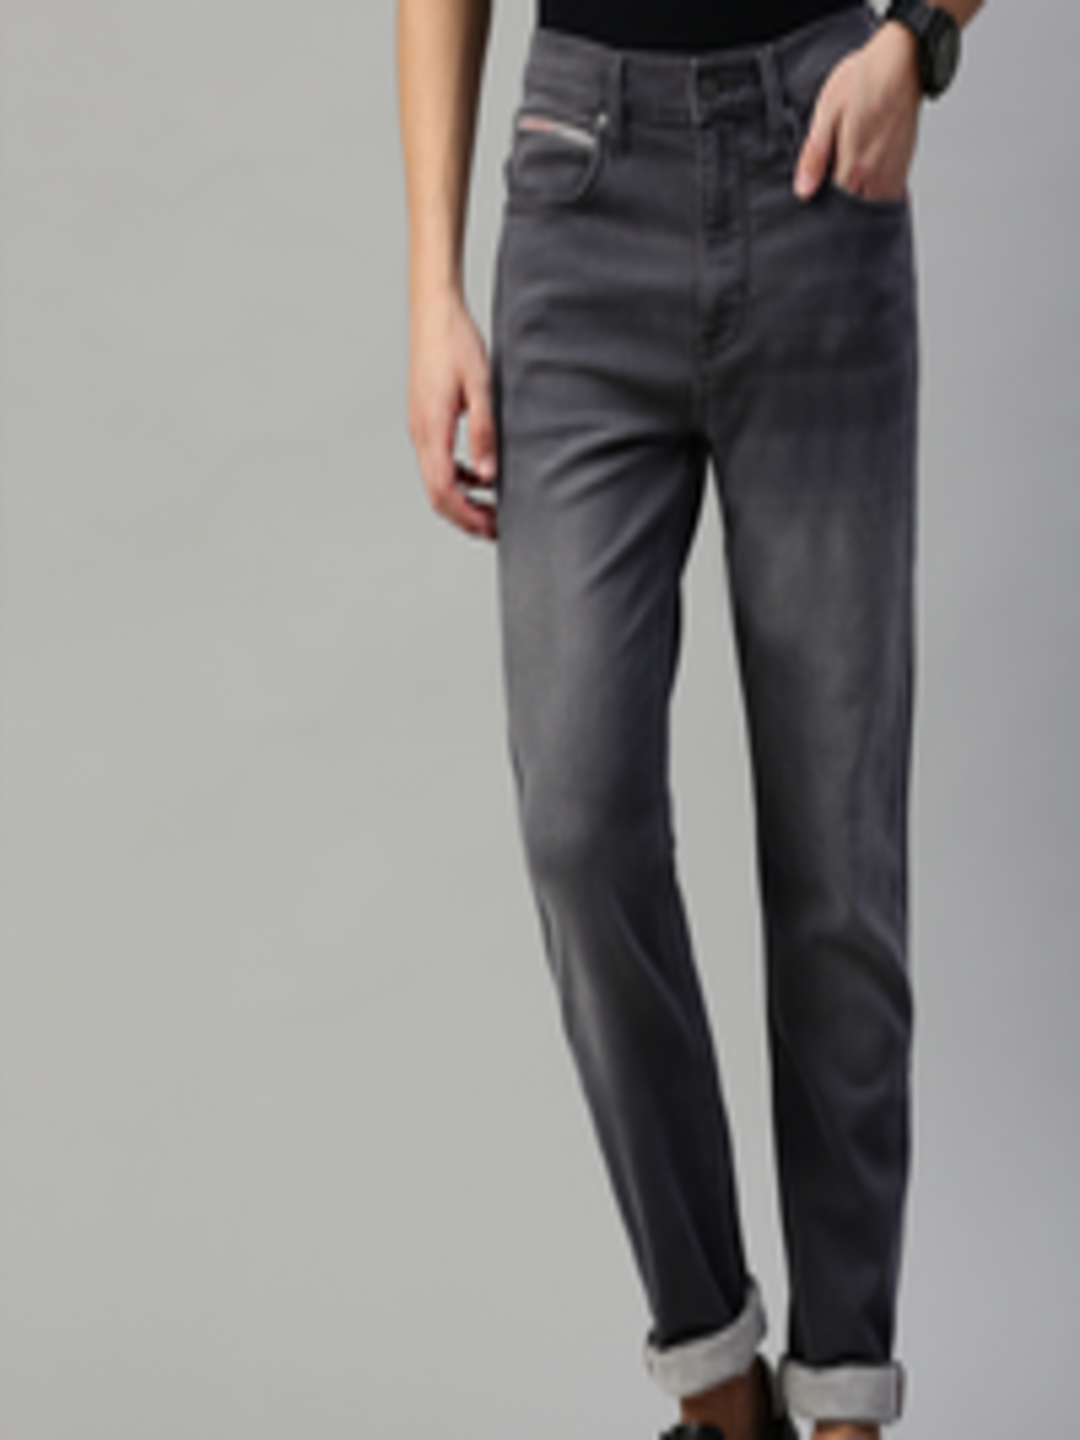 Buy Lee Men Grey Slim Fit Mid Rise Clean Look Stretchable Jeans - Jeans ...